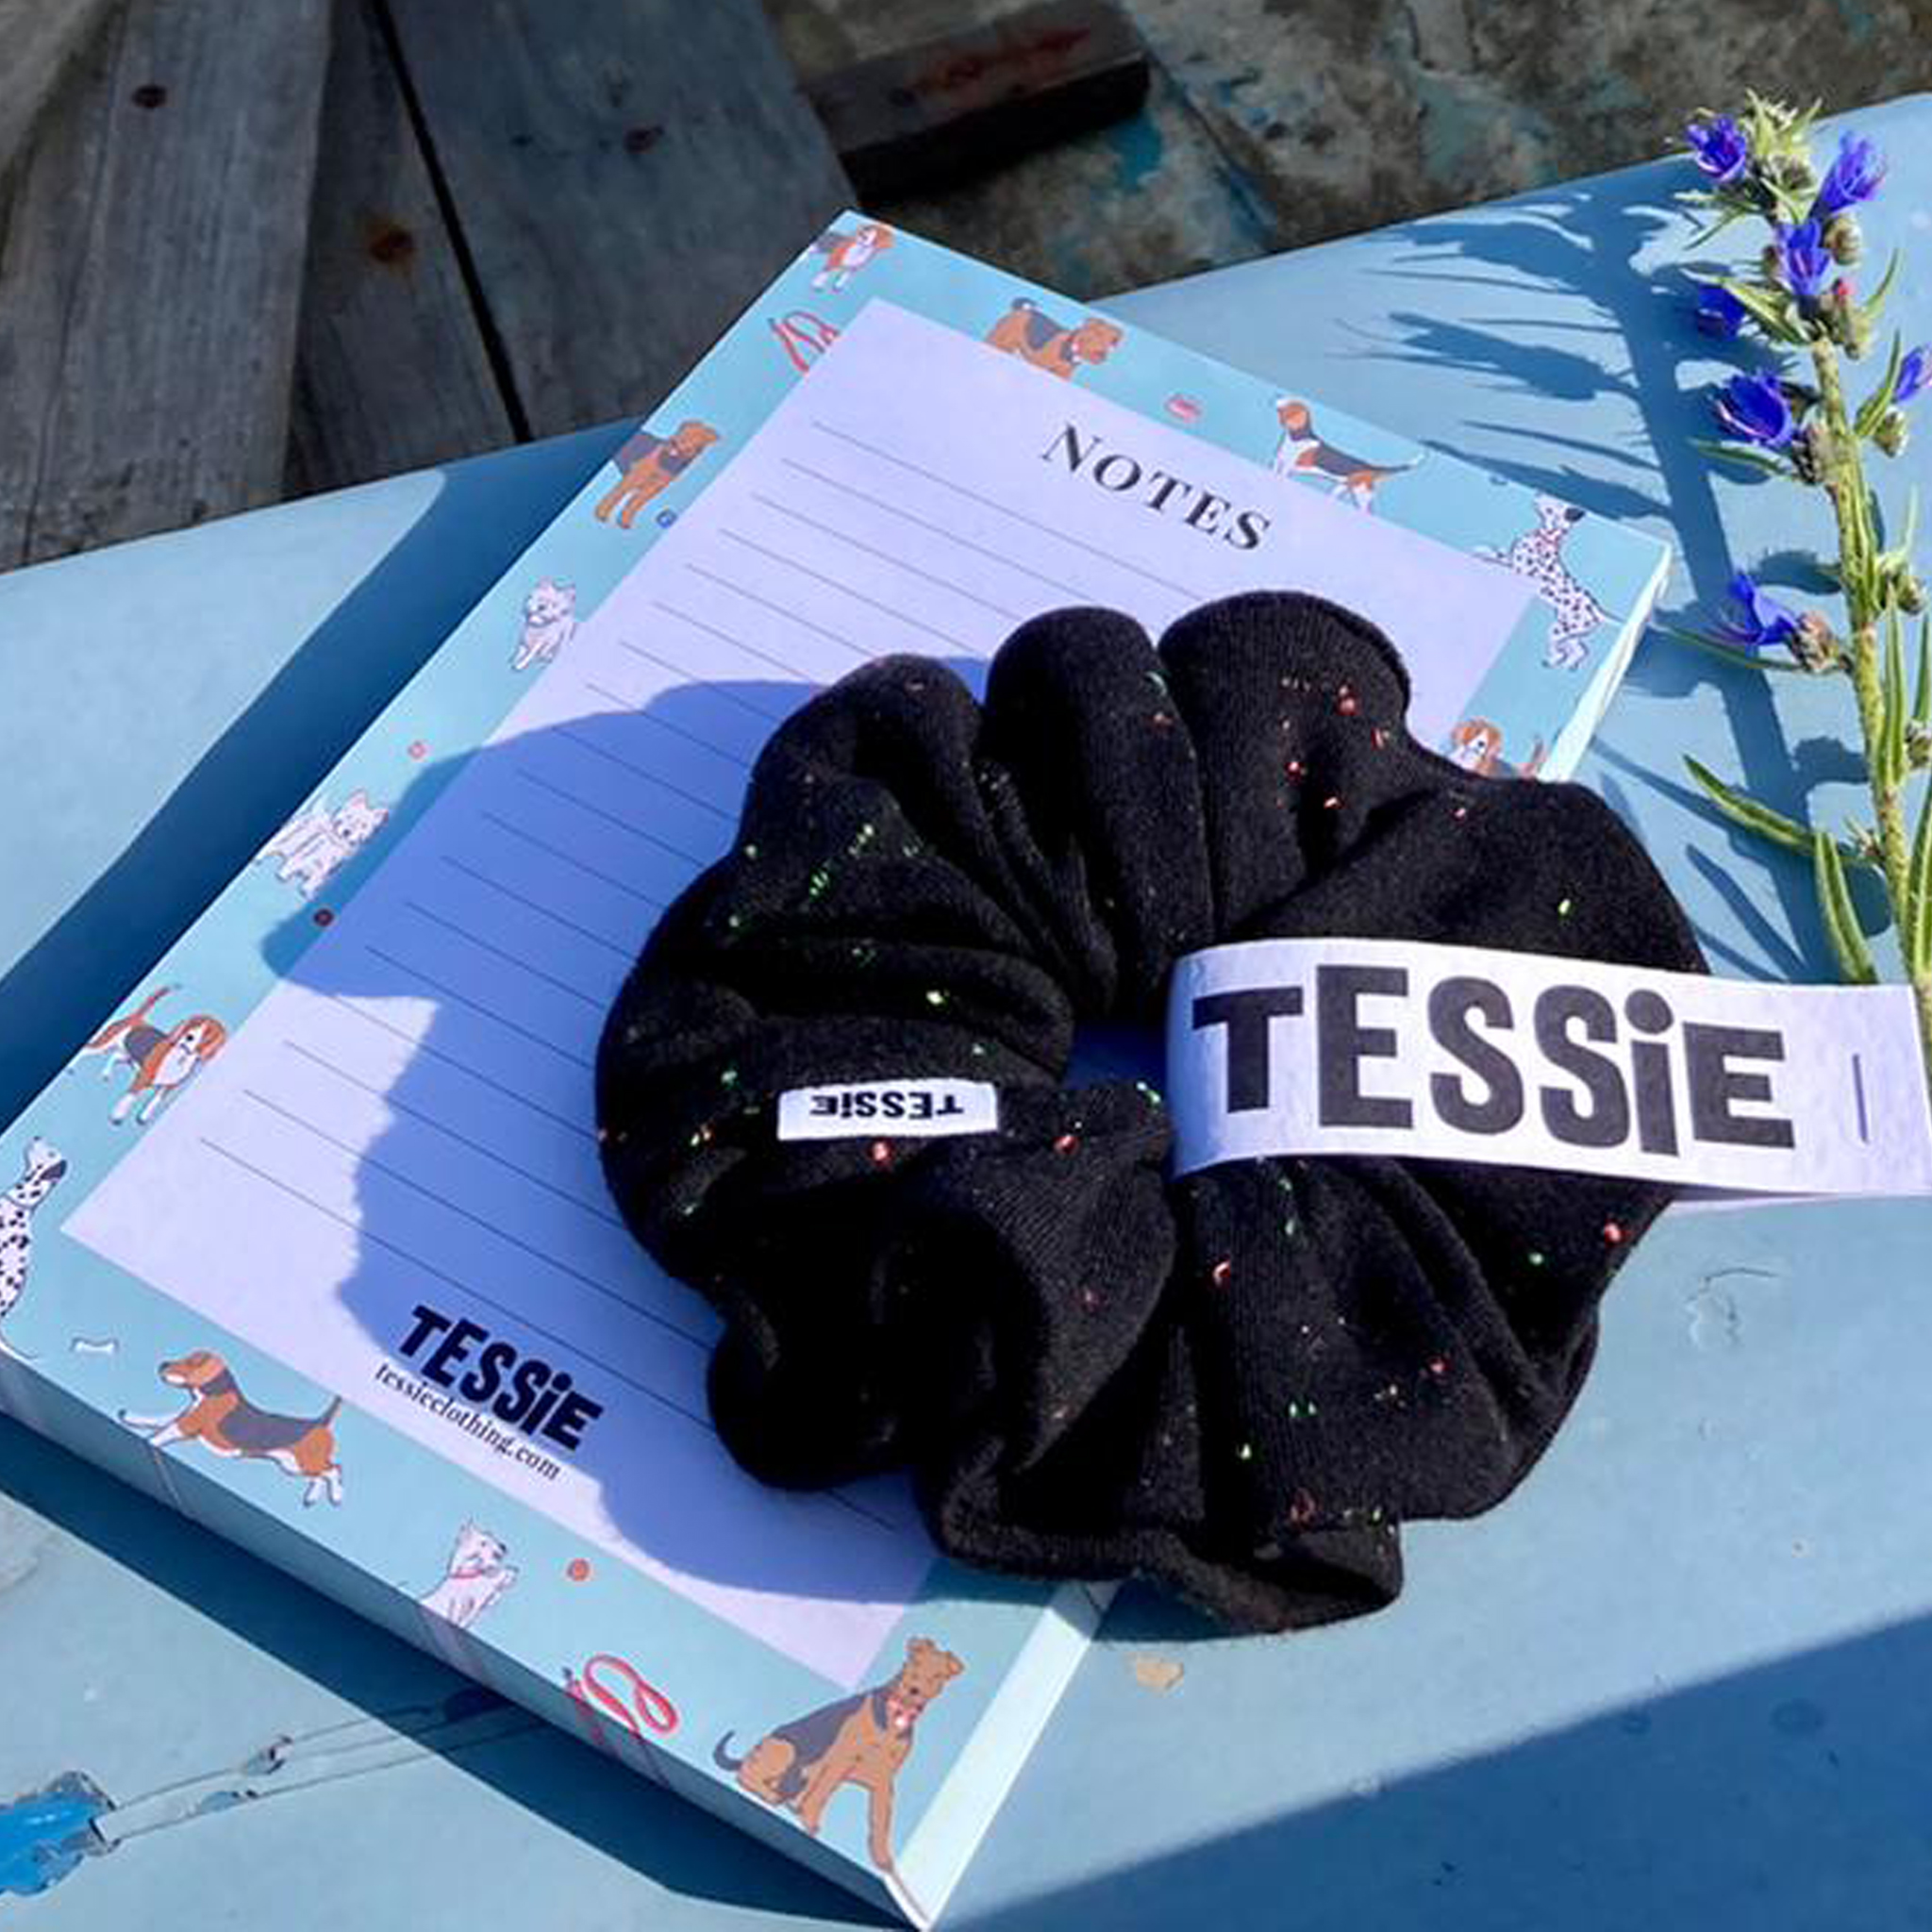 Tessie Clothing Confetti Black Hair Scrunchie and Poppy Dog Print A5 Notepad